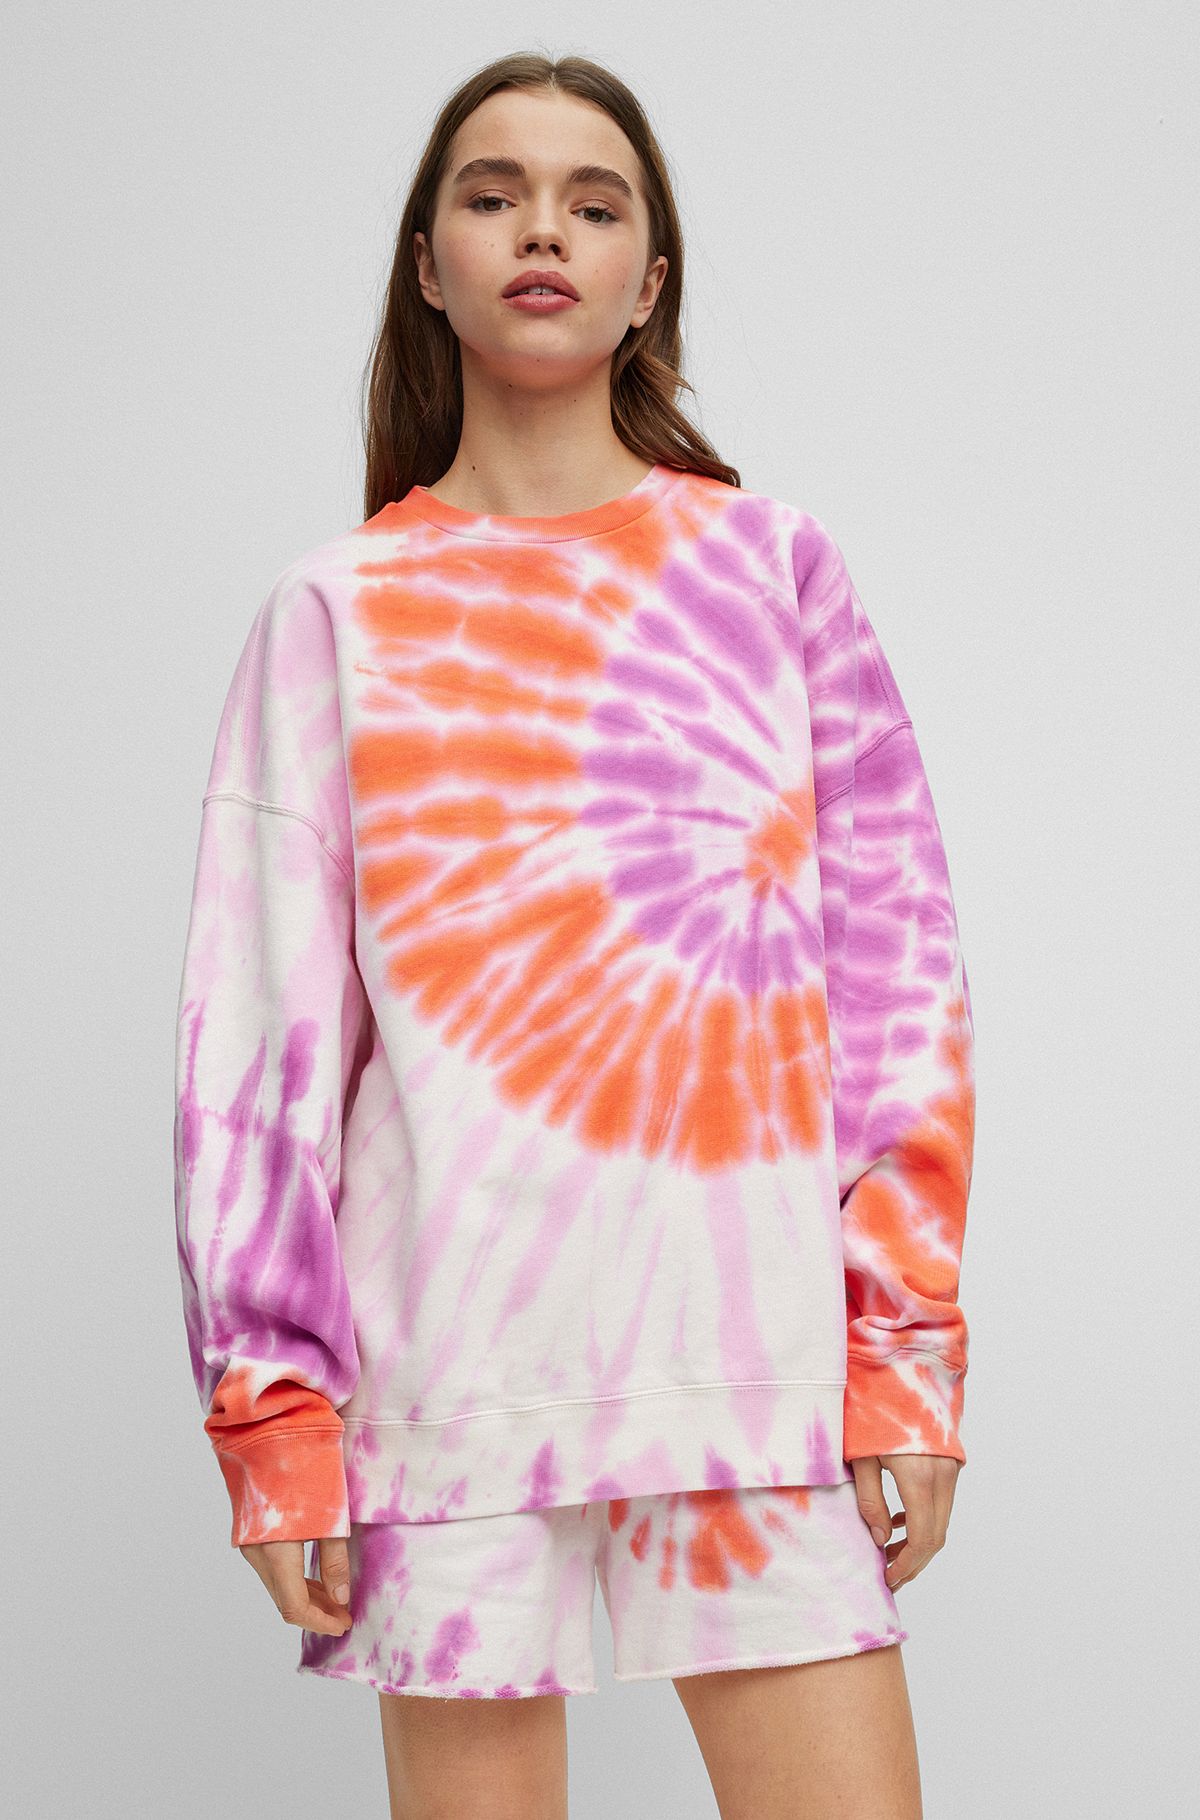 Oversized-fit cotton sweatshirt with seasonal artwork, Patterned